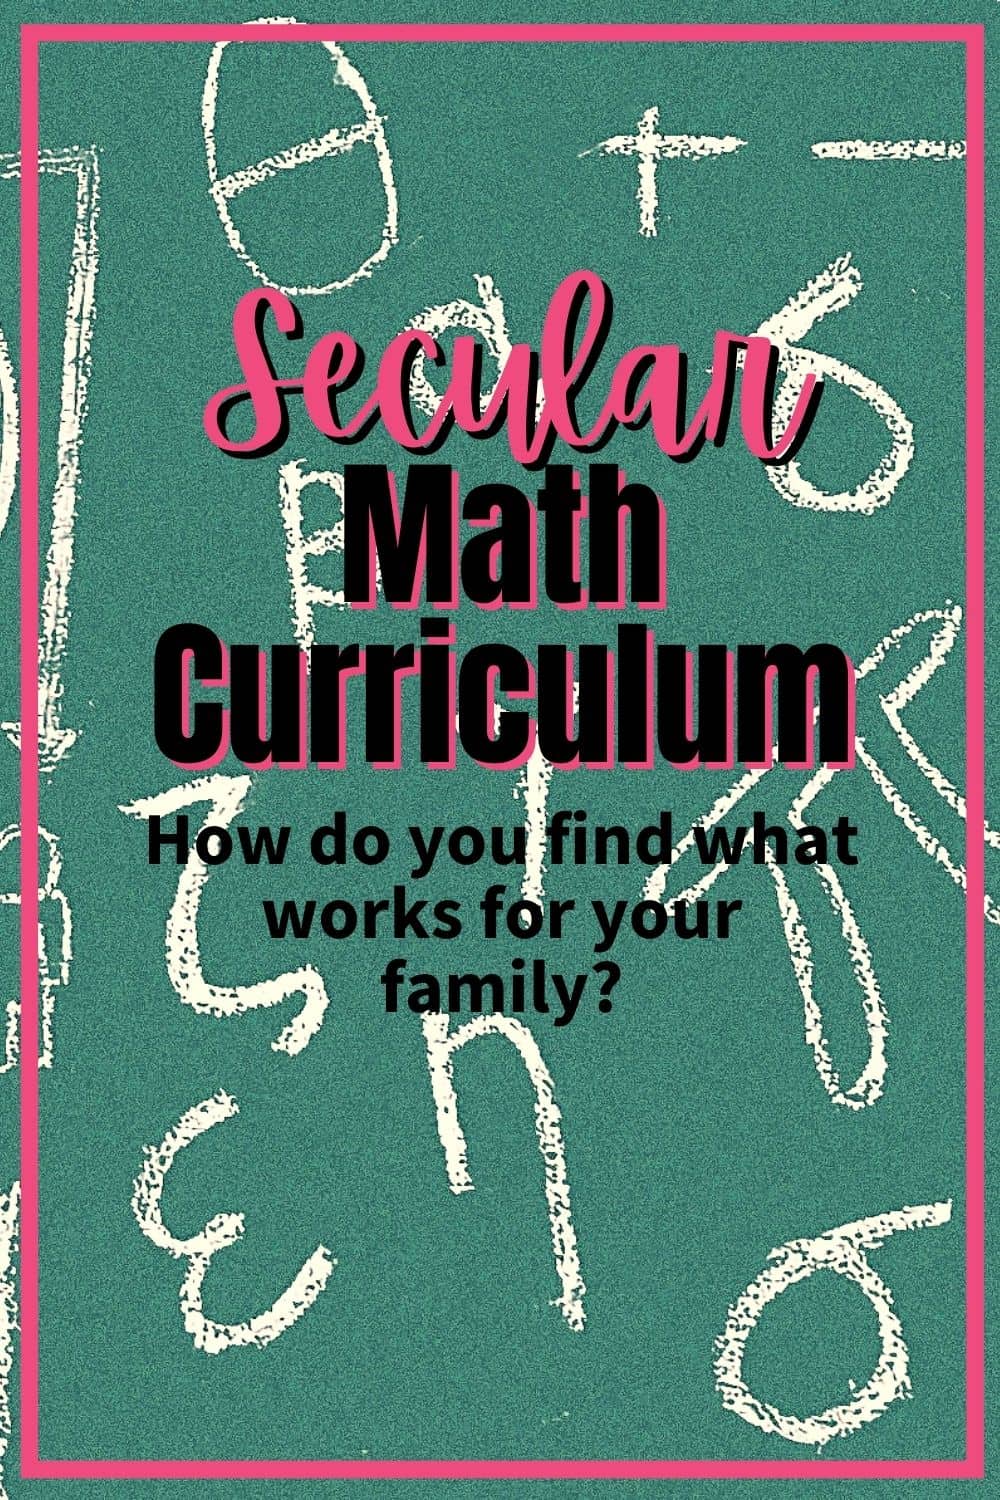 Secular Math Curriculum